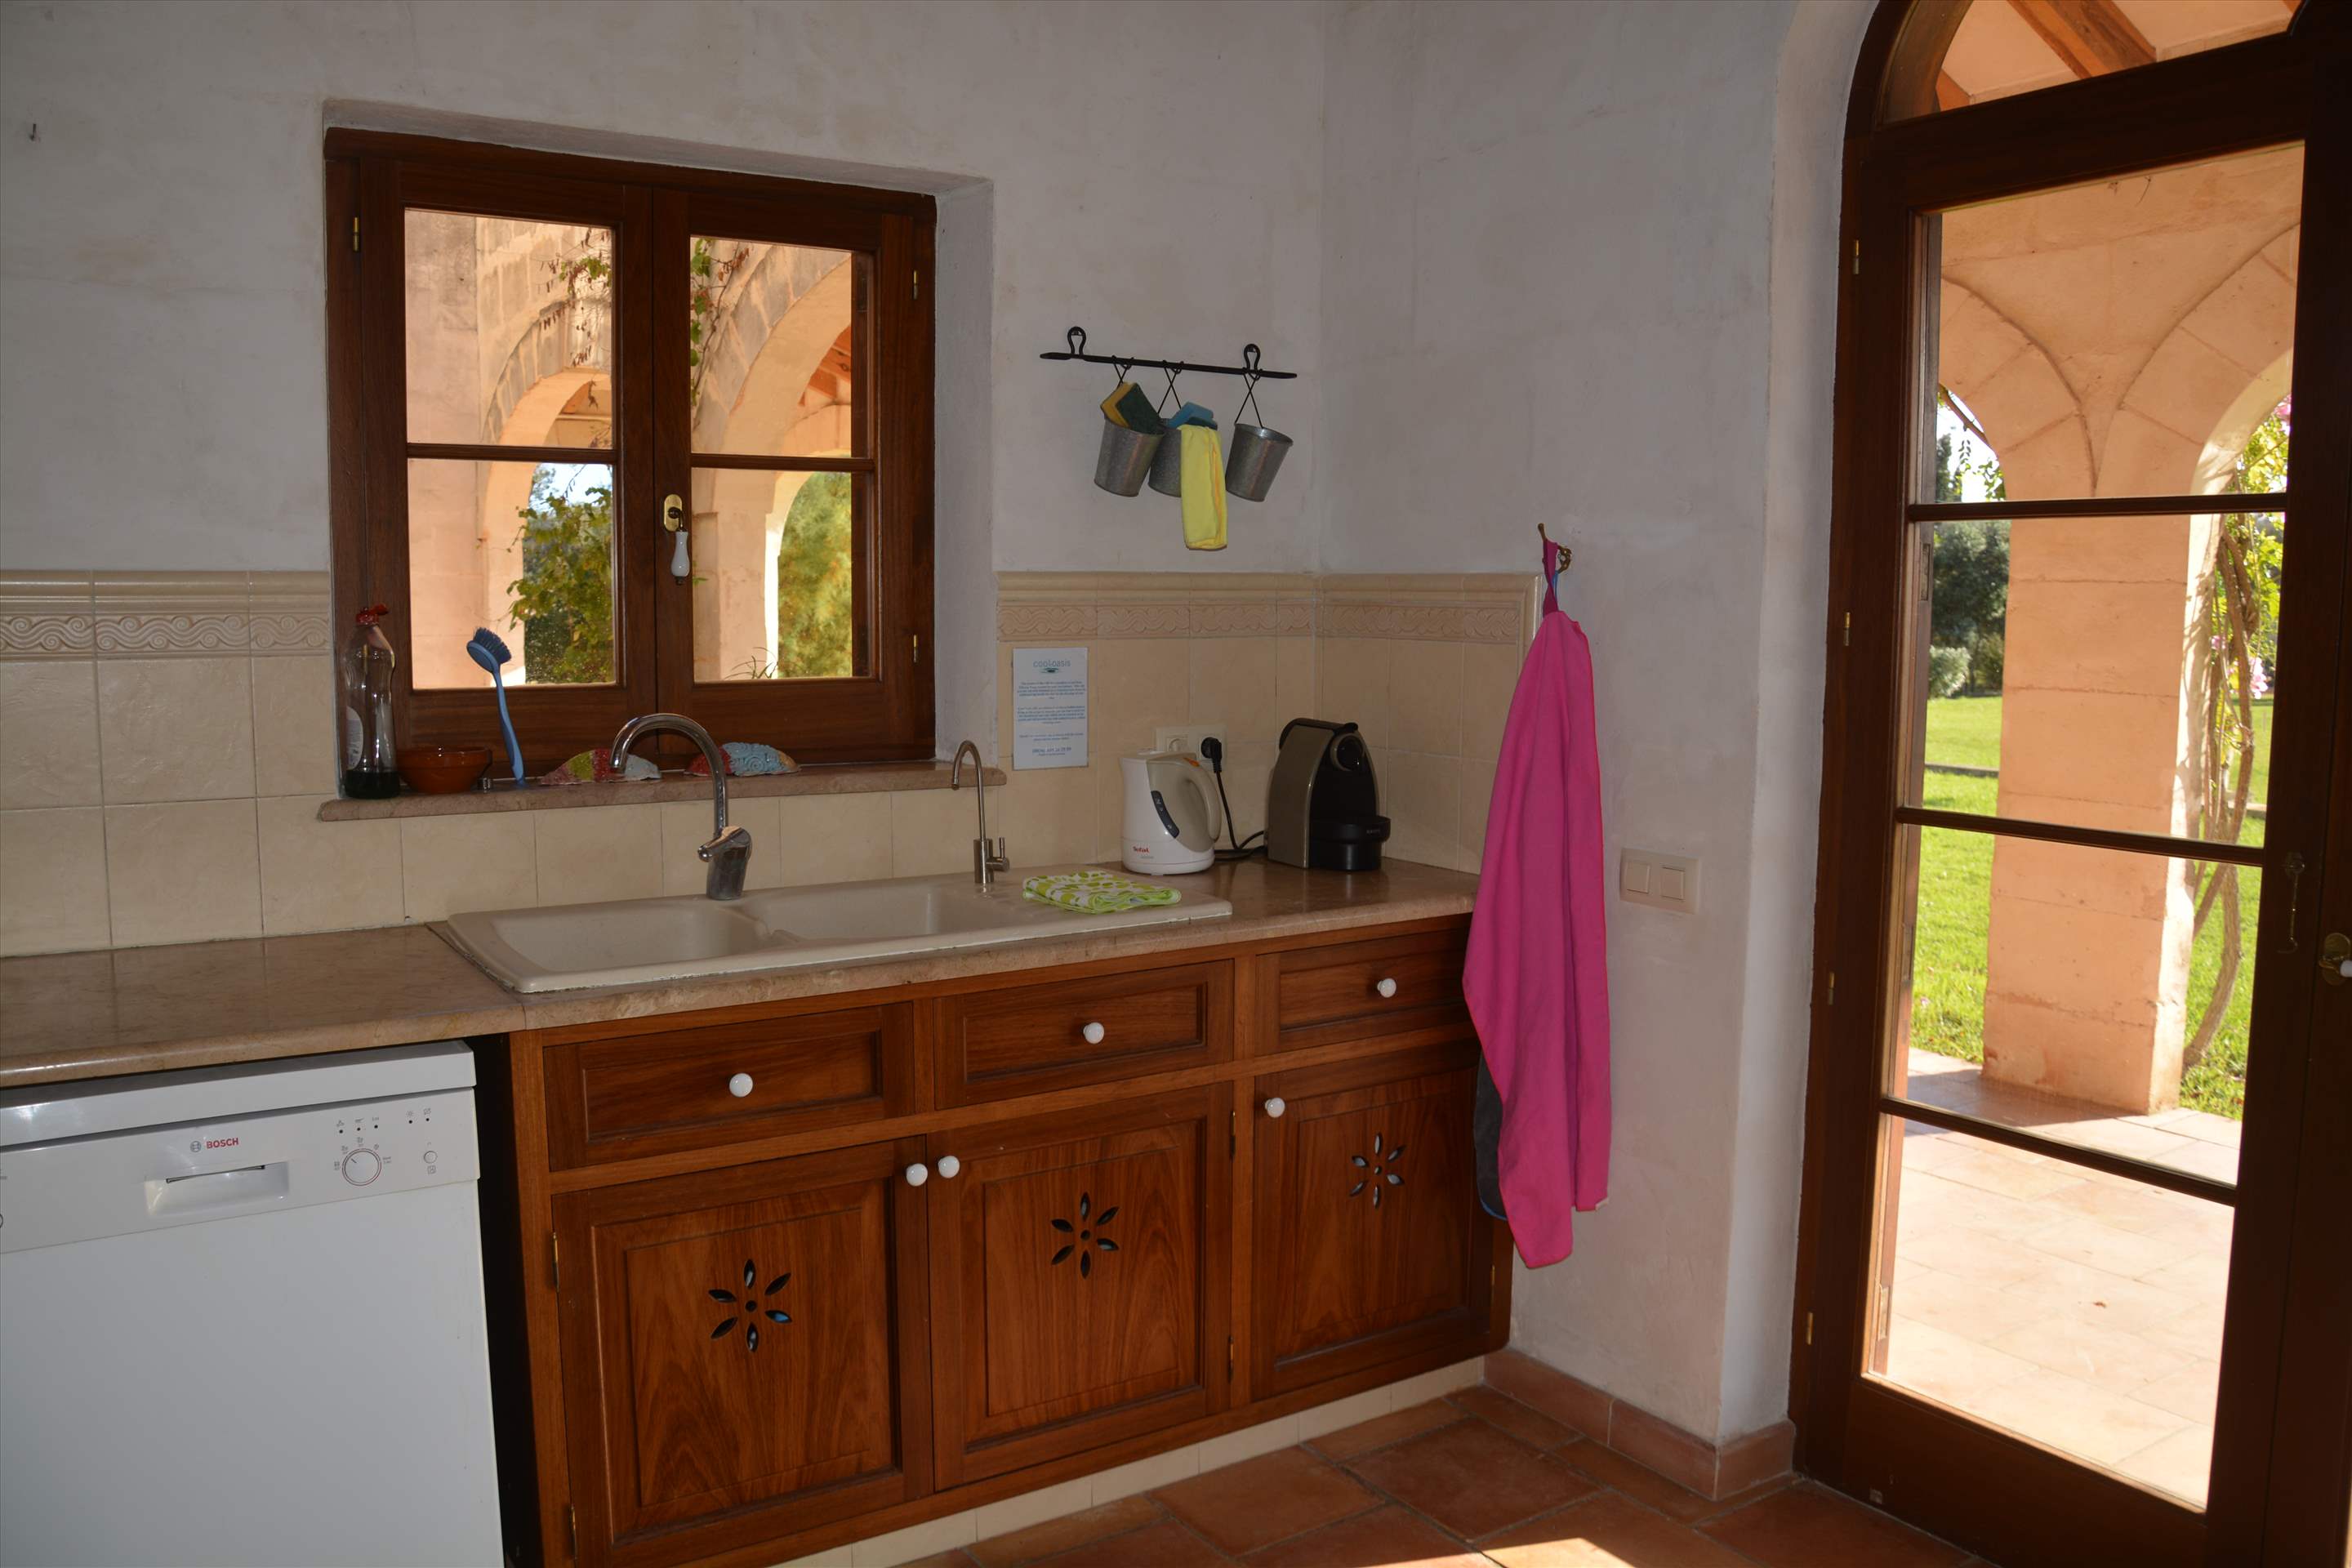 Les Arcs, 5 bedroom villa in Mahon, San Luis & South East, Menorca Photo #10